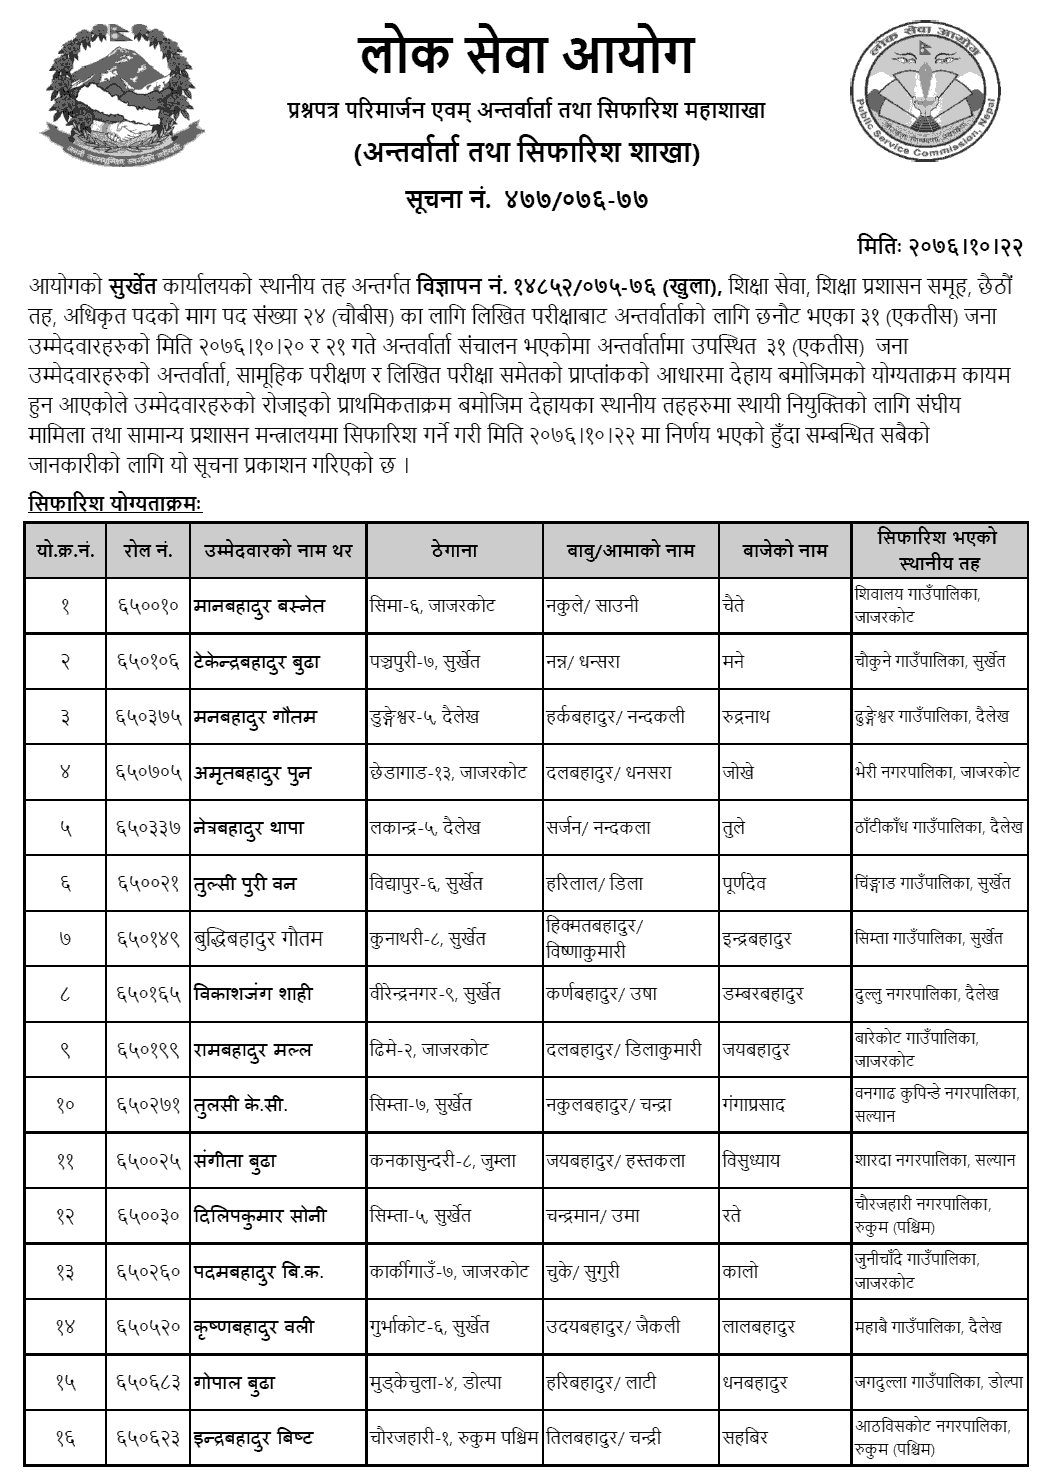 Lok Sewa Aayog Surkhet Local Level 6th Education Service Final Result and Sifaris